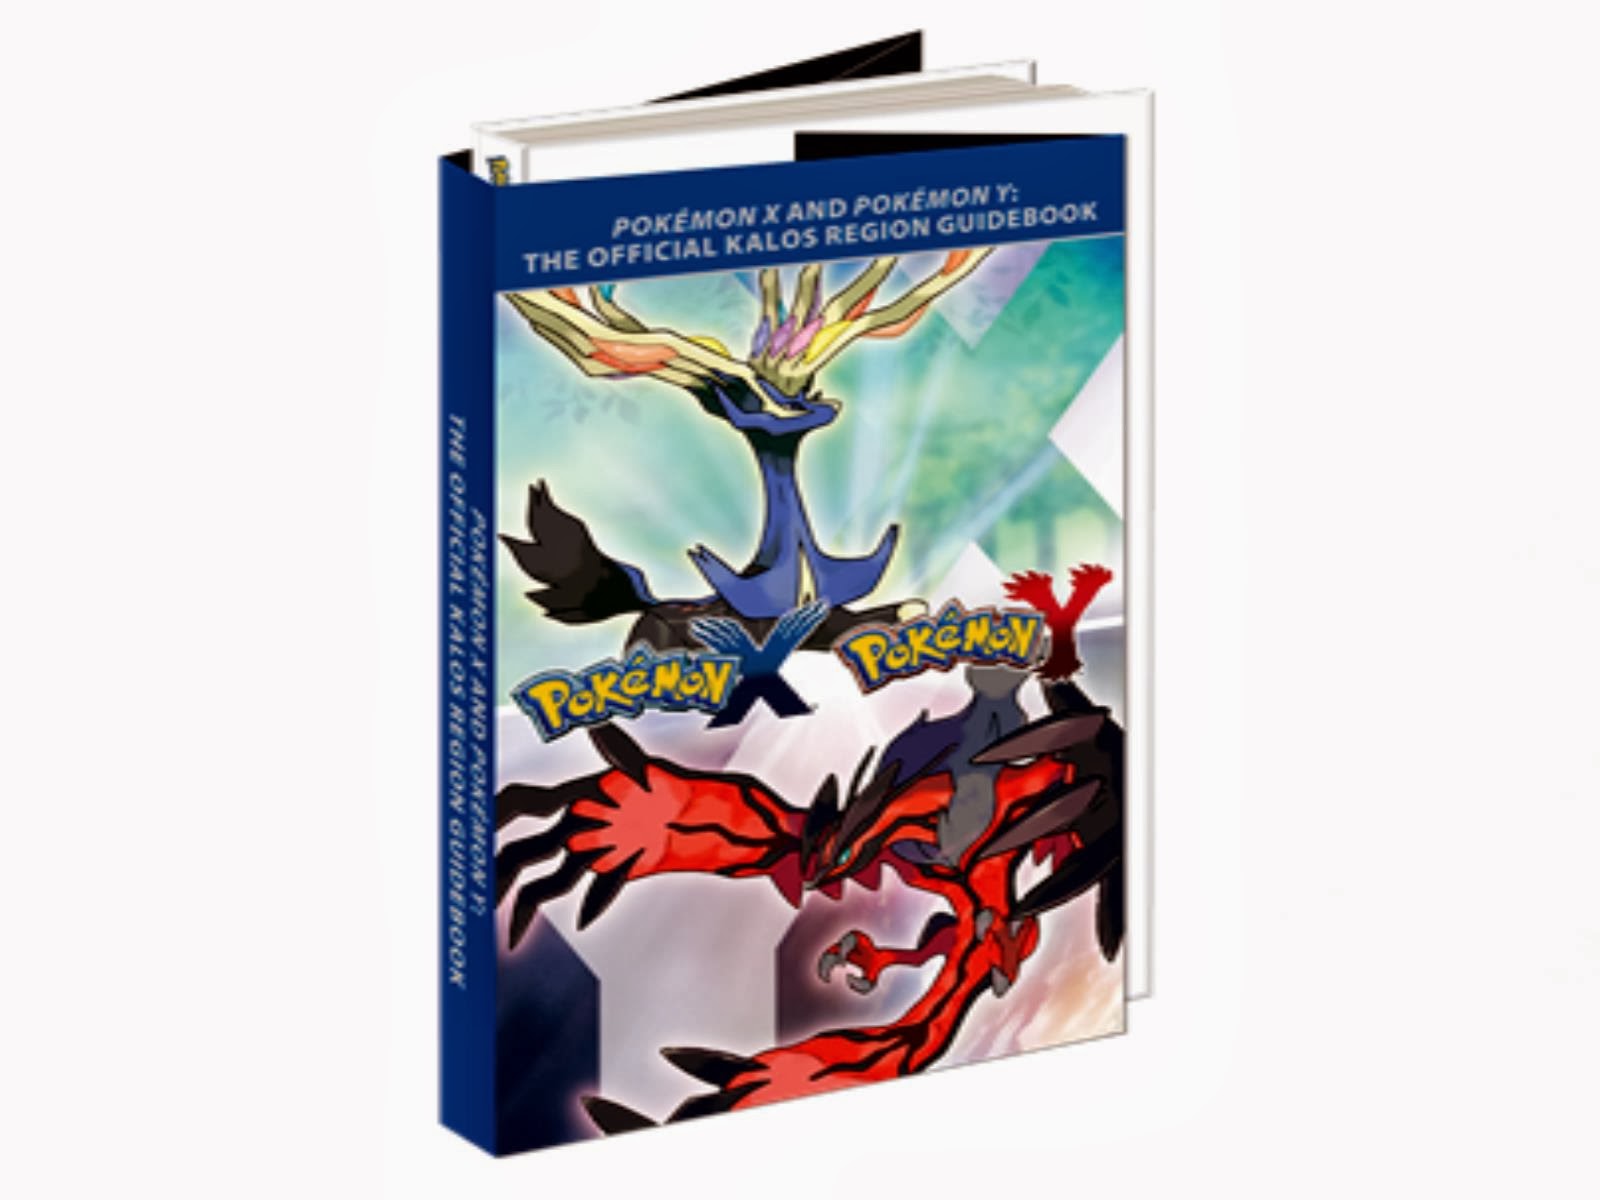 the official pokemon handbook pdf free download